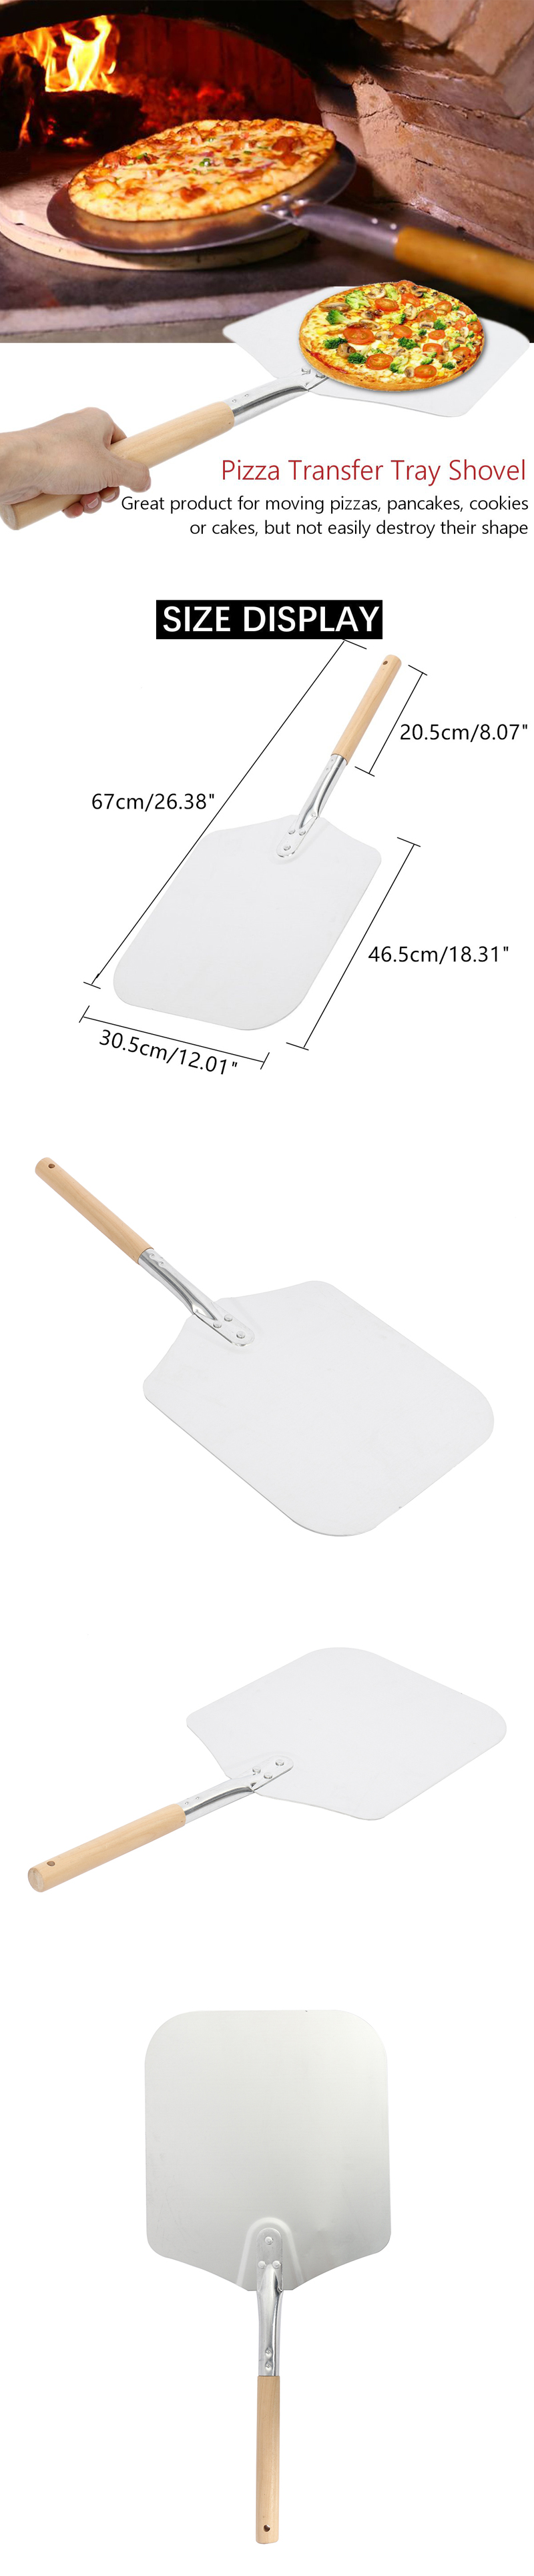 Aluminium-Pizza-Spatula-Peel-Shovel-Cake-Lifter-Plate-Holder-BBQ-Grill-Oven-Stove-Baking-Tool-1527683-1